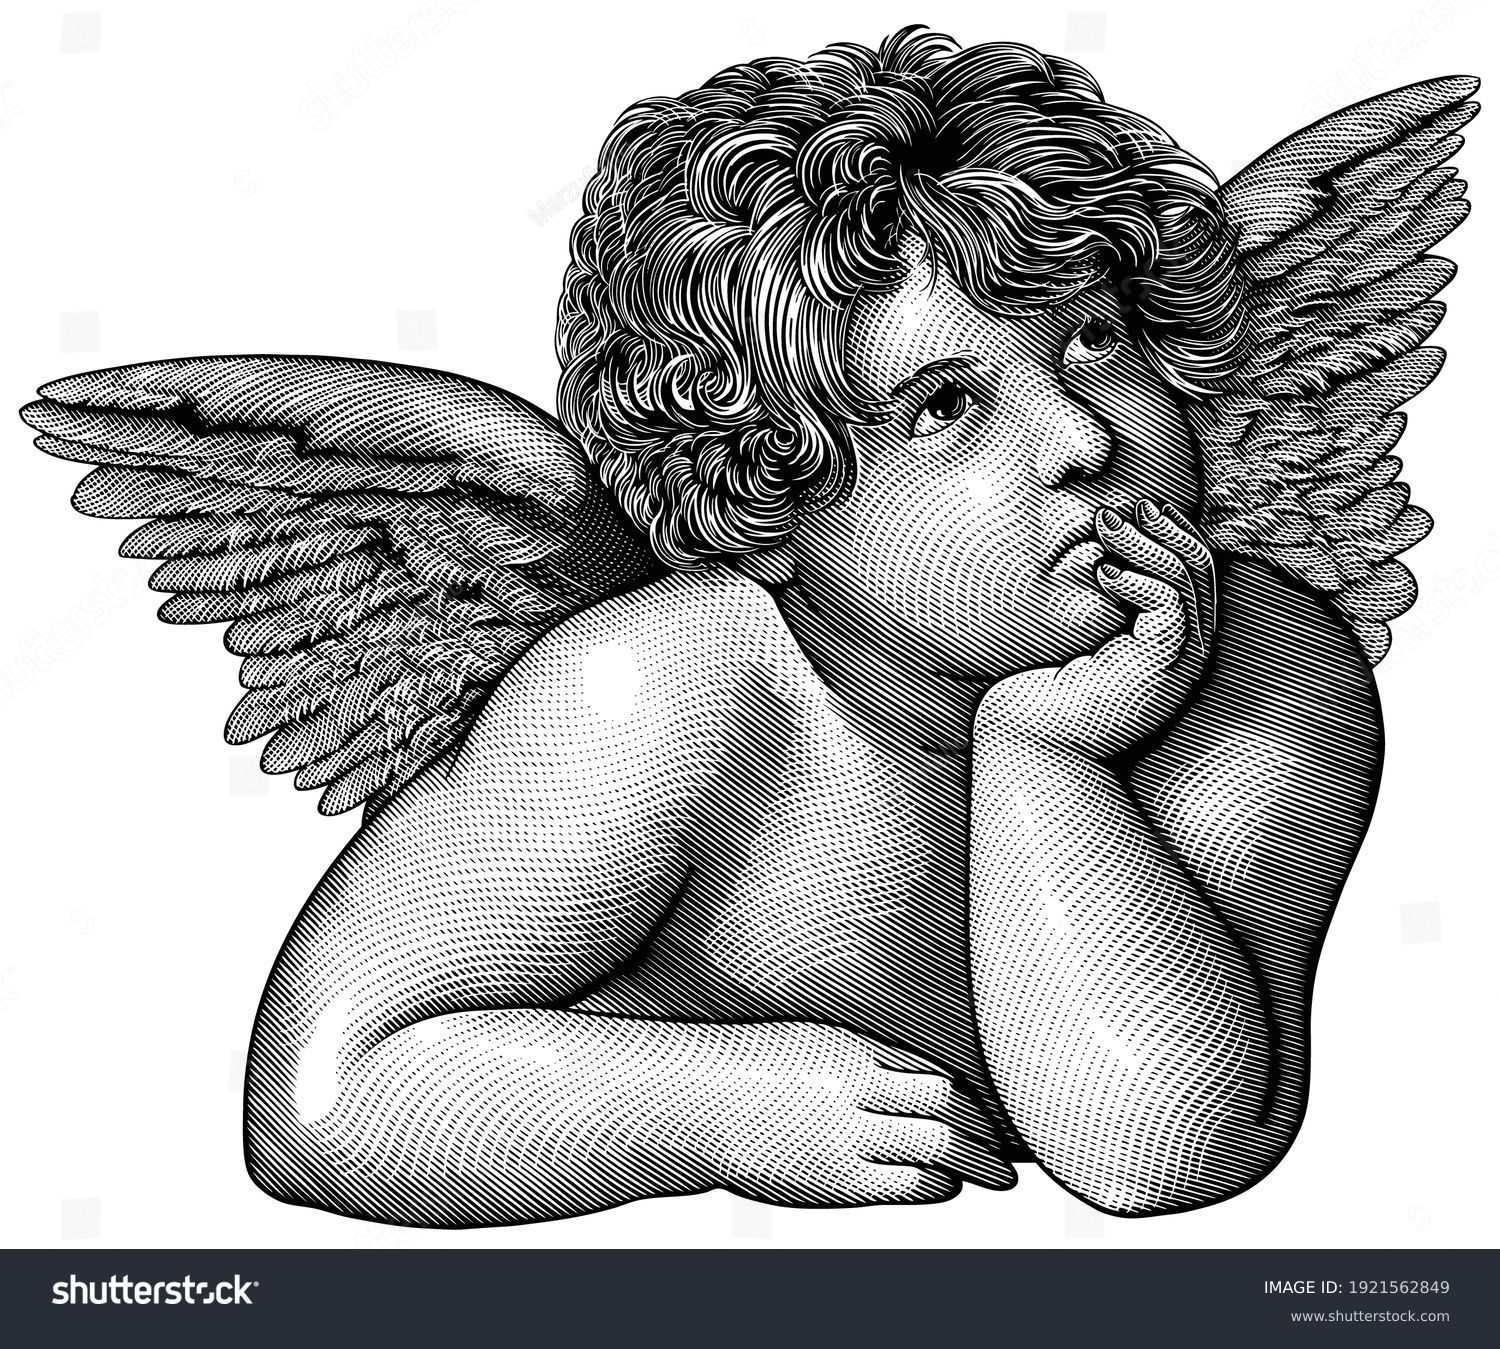 SVG of Pensive angel. Art detailed editable illustration. Vector vintage engraving. Isolated on white background. 8 EPS svg